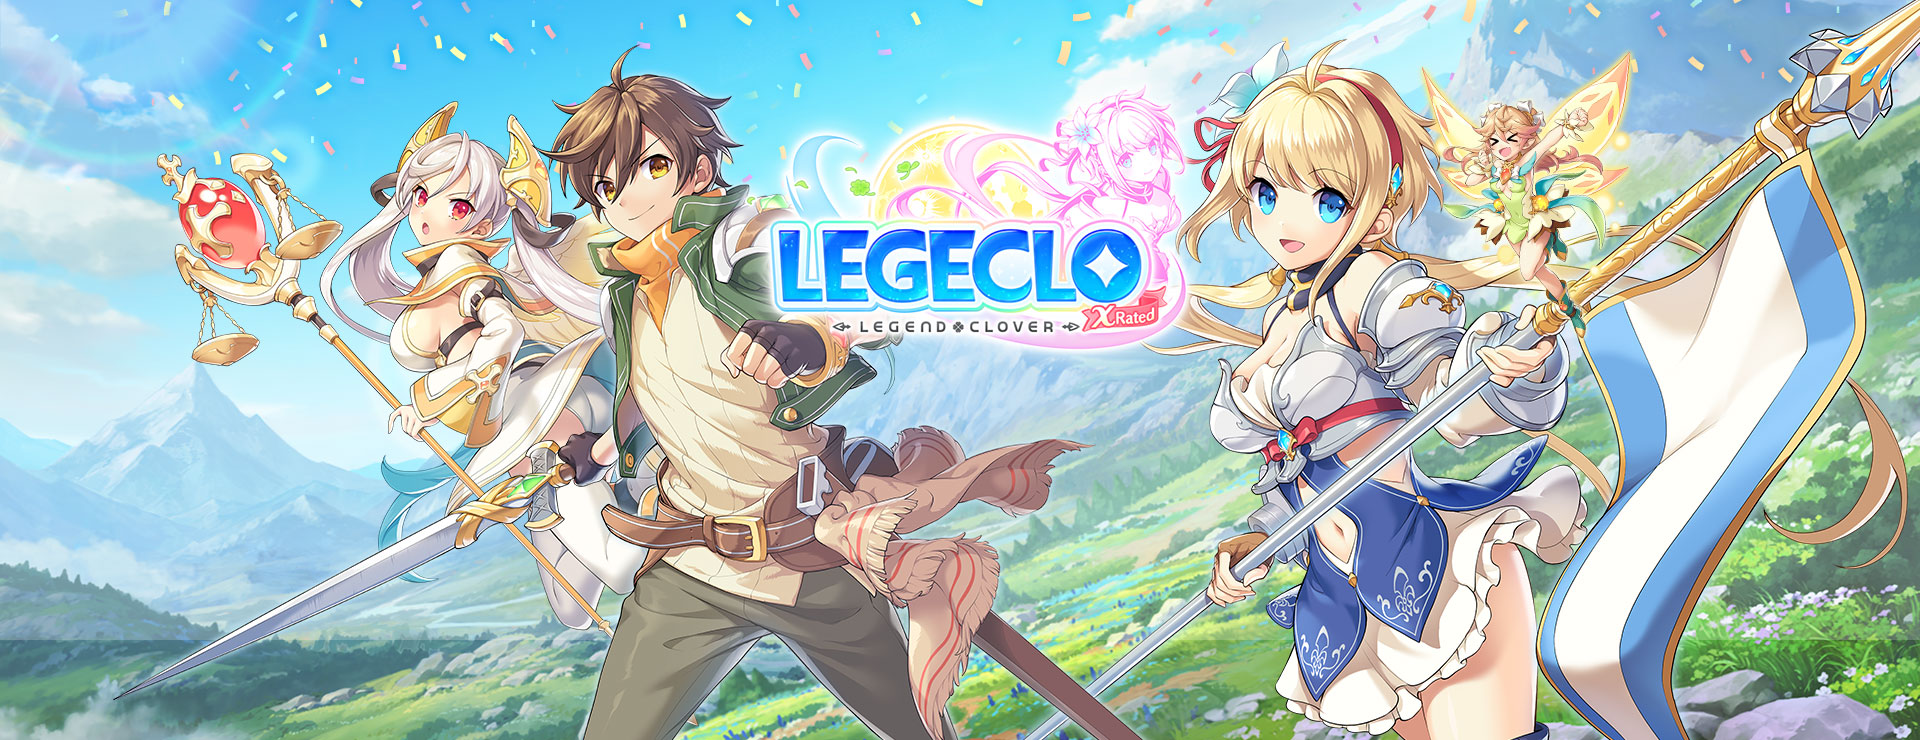 Legeclo: Legend Clover X Rated - 回合制角色扮演游戏 遊戲